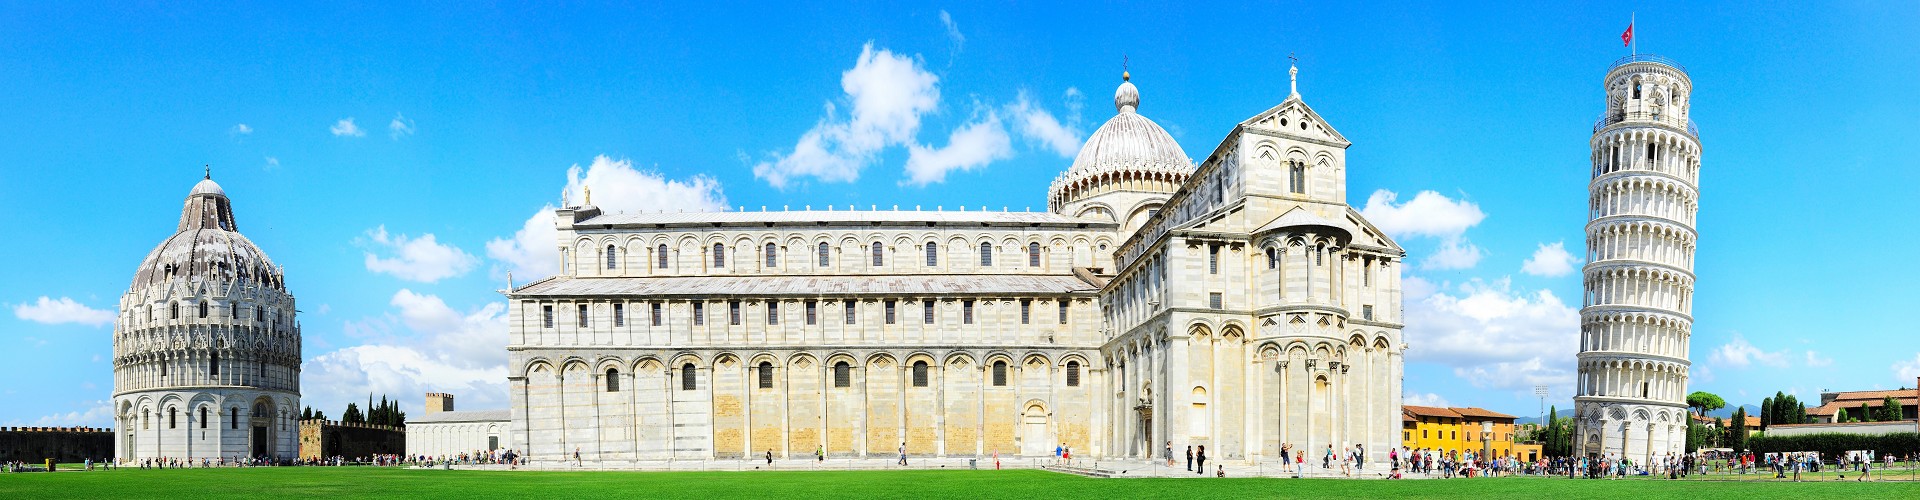 Tours to Siena, Lucca, Montepulciano, Pienza, Montalcino | Day Tours From Pisa